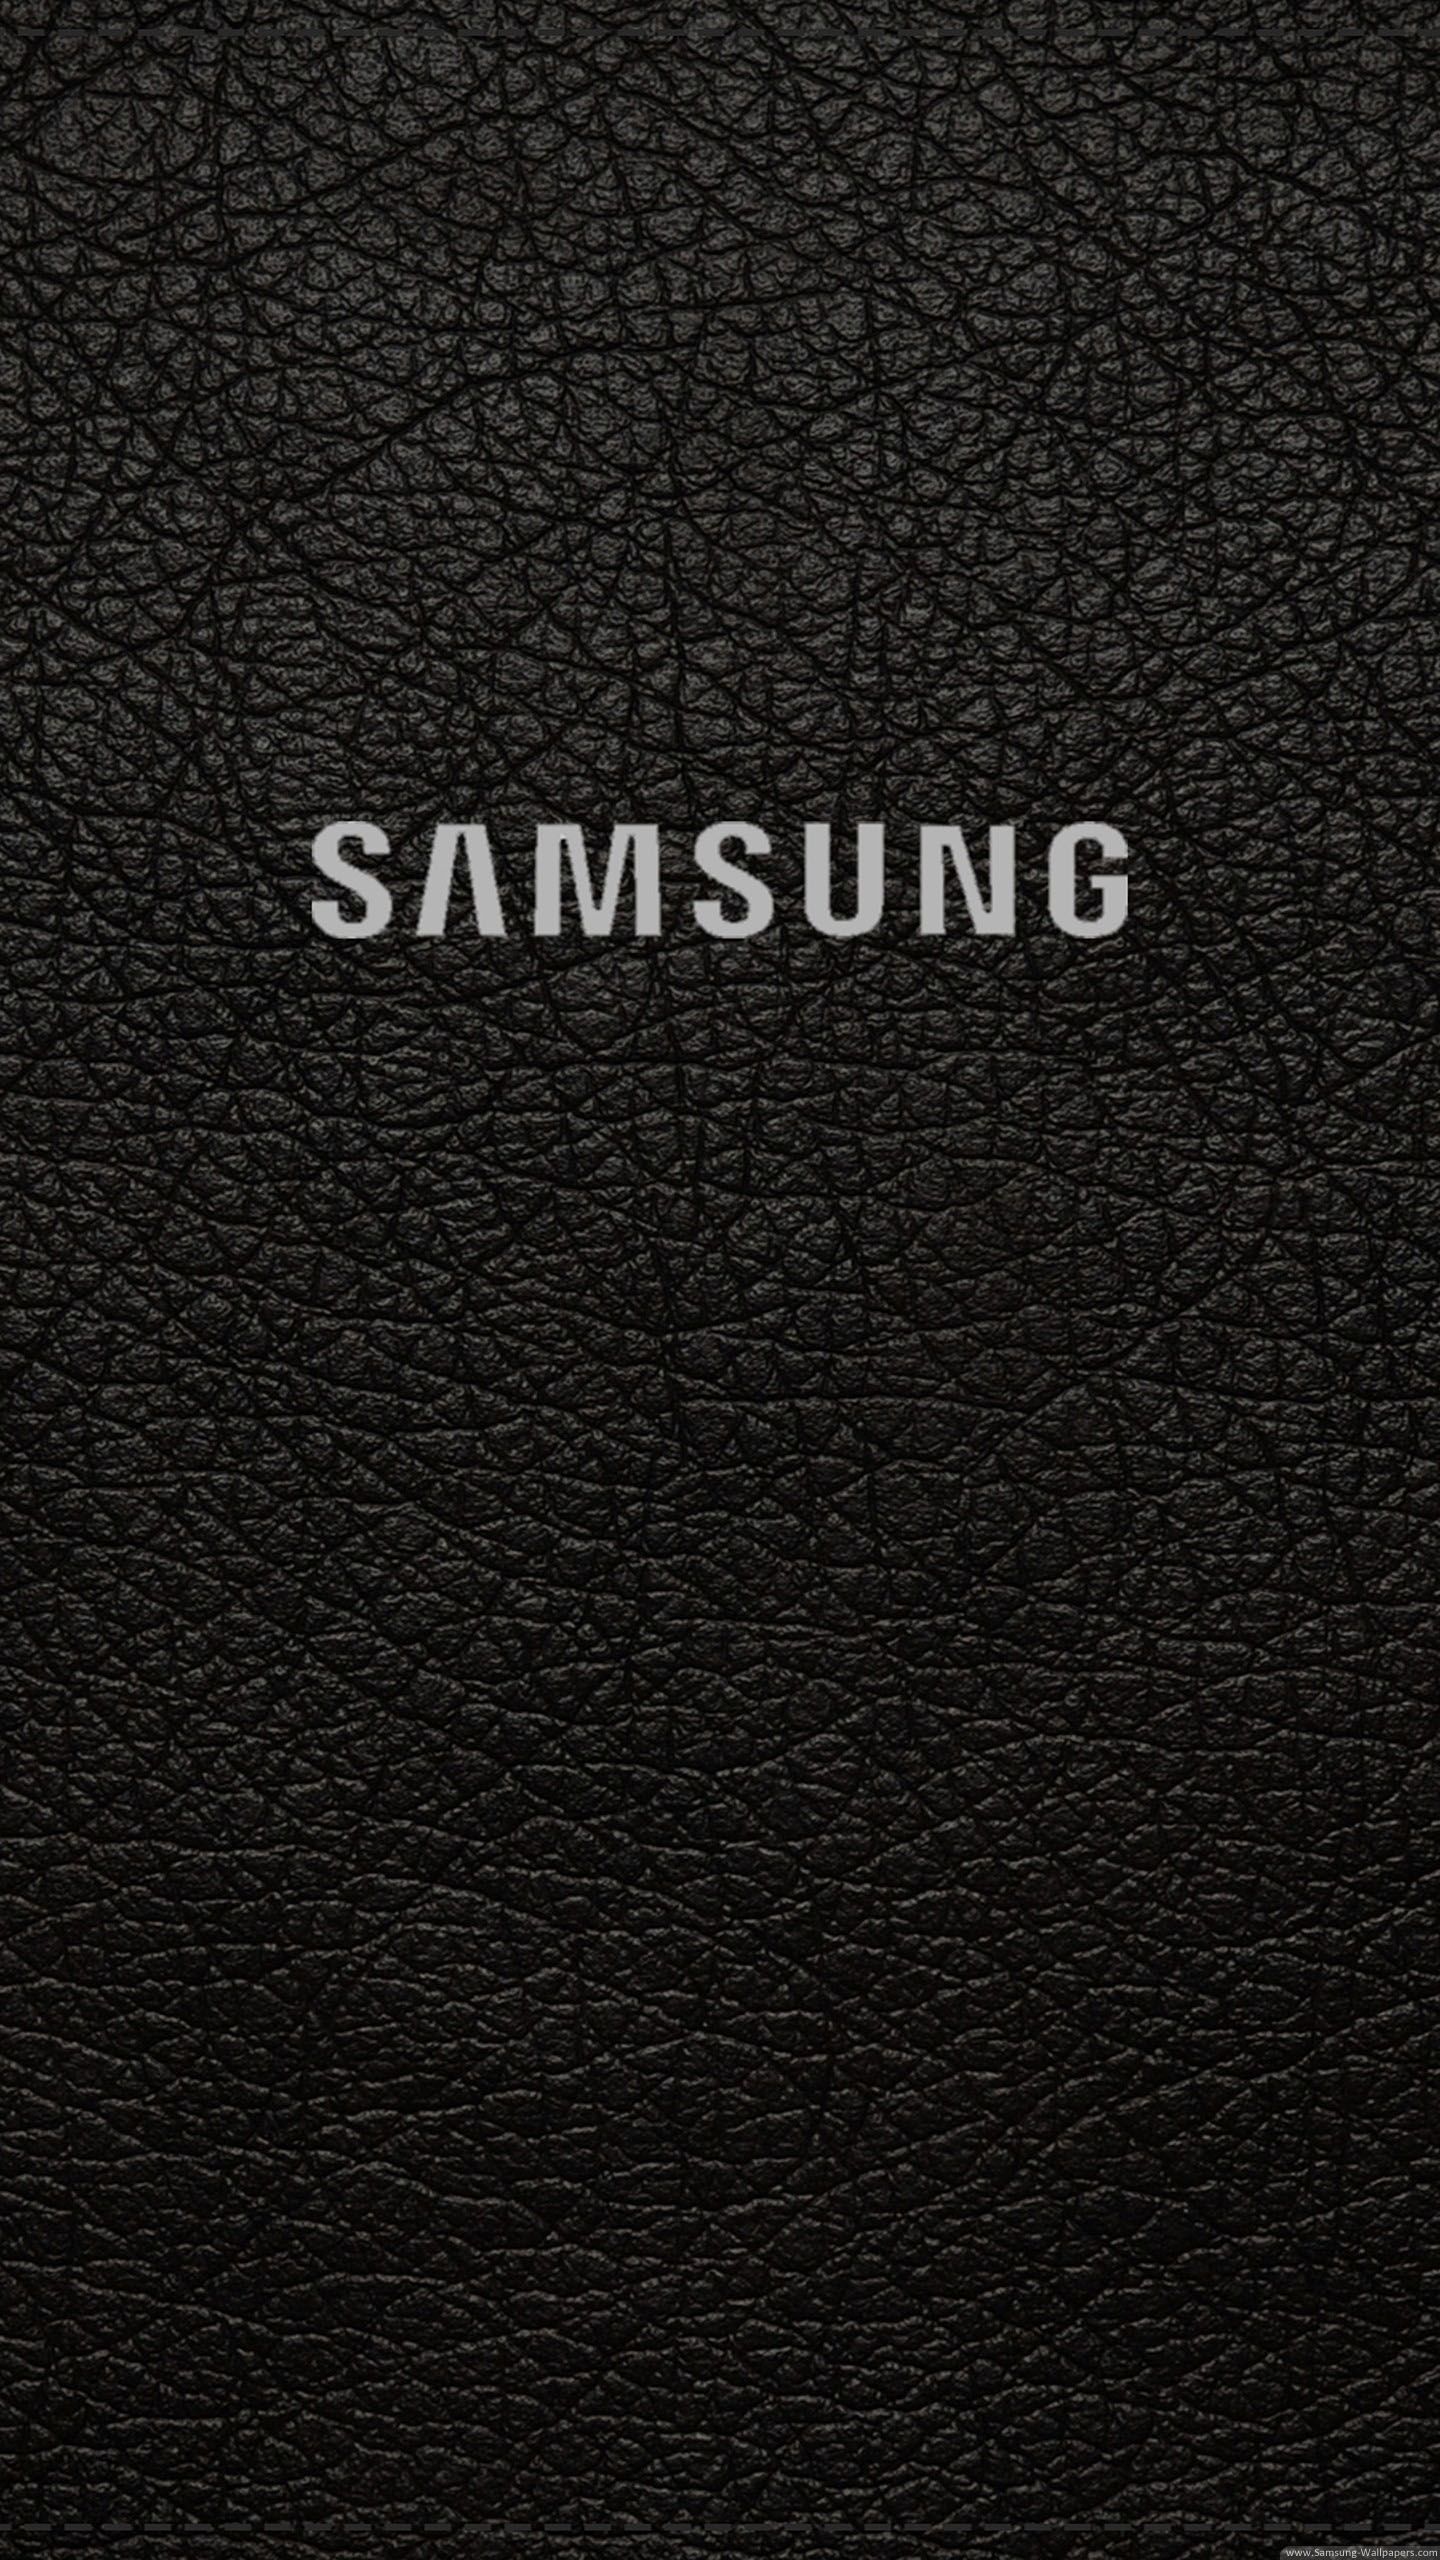 4K Samsung Mobile Wallpapers - Wallpaper Cave